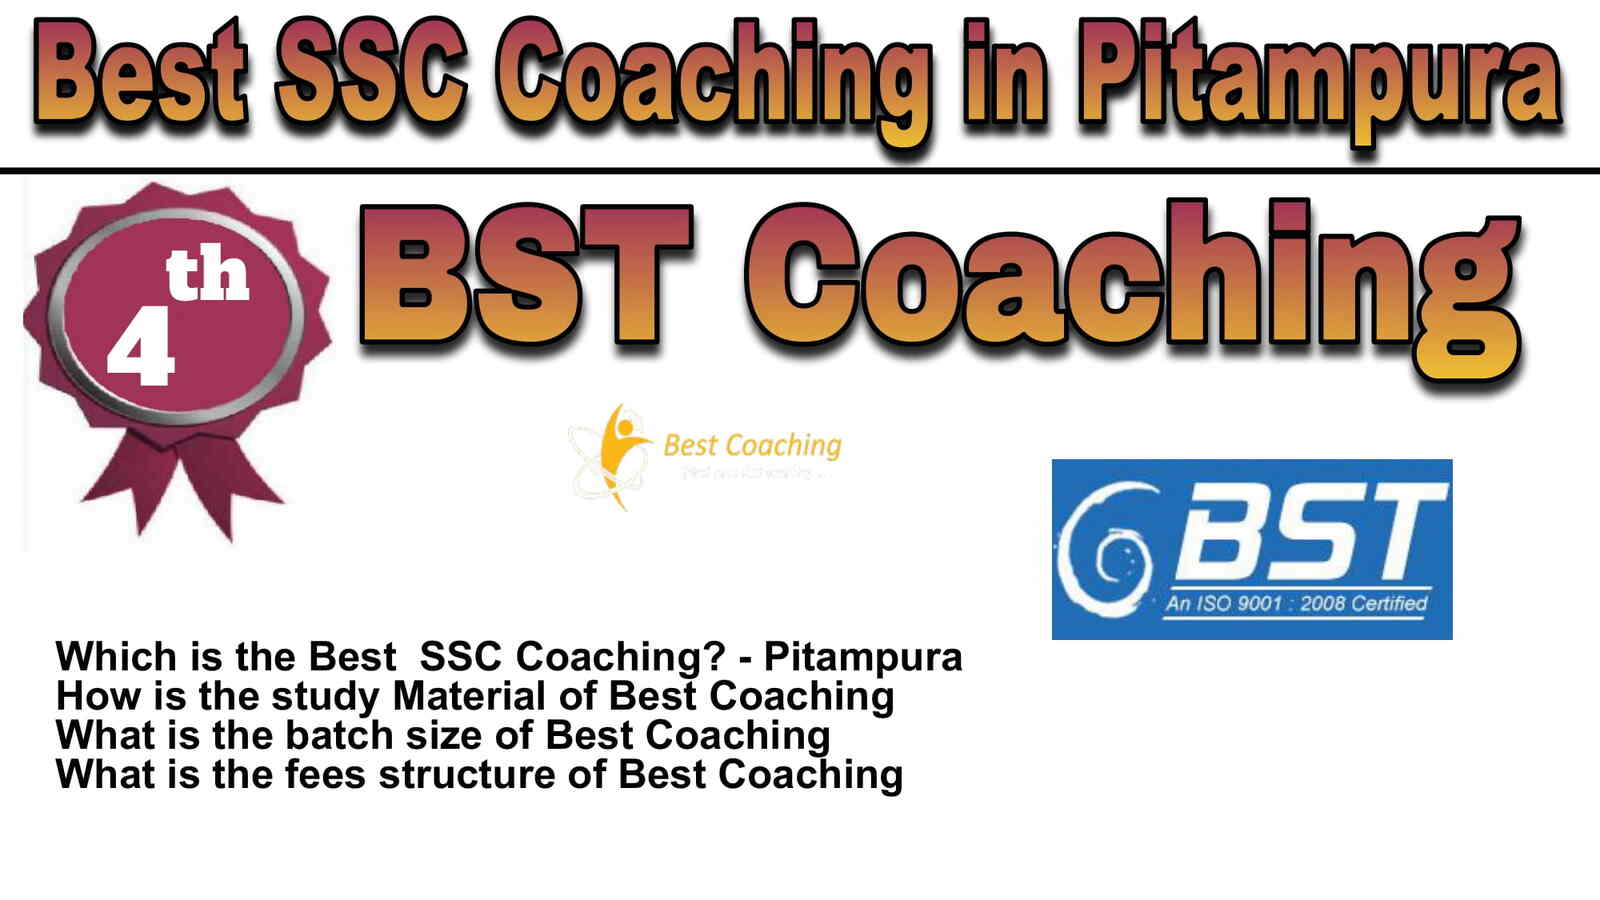 Rank 4 Best SSC Coaching in Pitampura